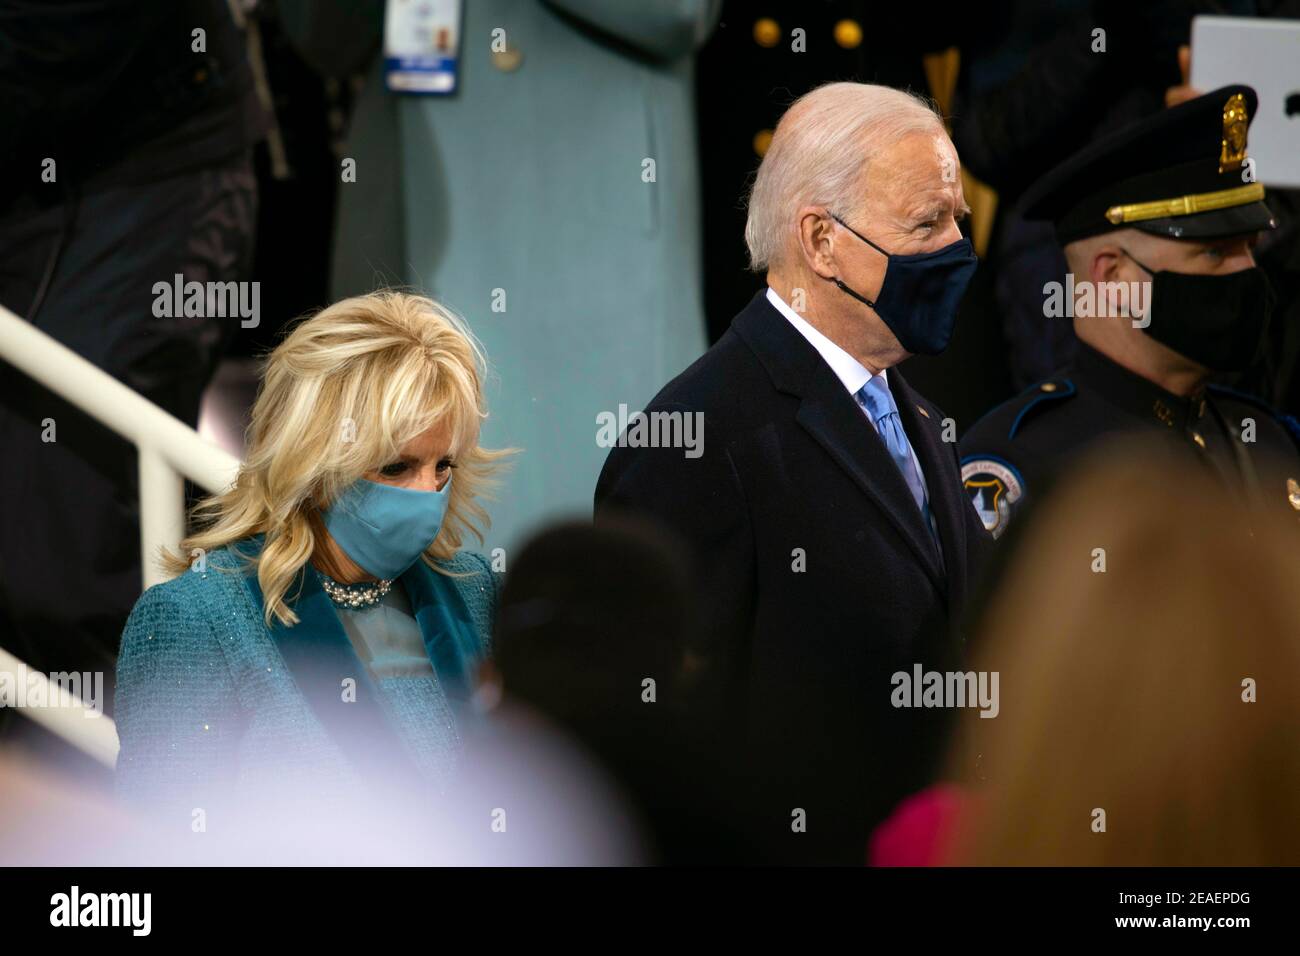 WASHINGTON DC, USA - 20 January 2021 - US President Joe Biden and his wife Dr. Jill Biden enter the inauguration platform during the 59th Presidential Stock Photo